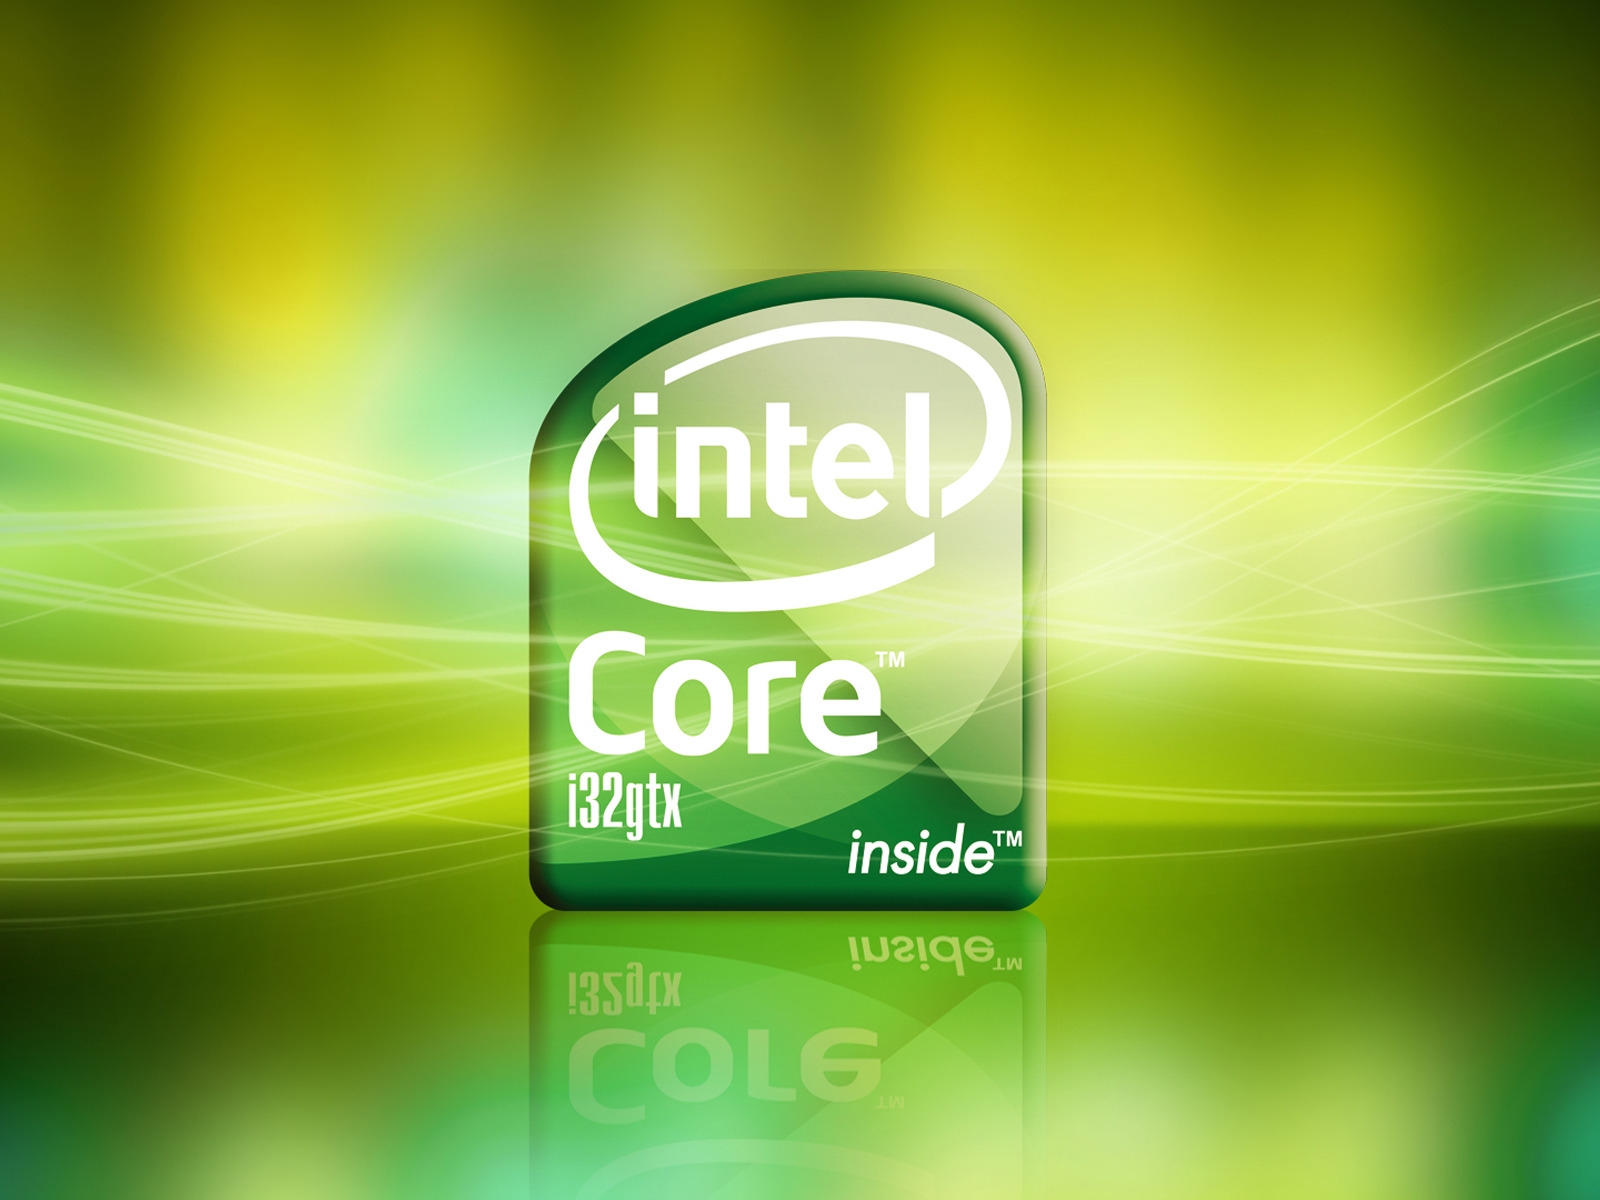 Intel Core i32gtx for 1600 x 1200 resolution